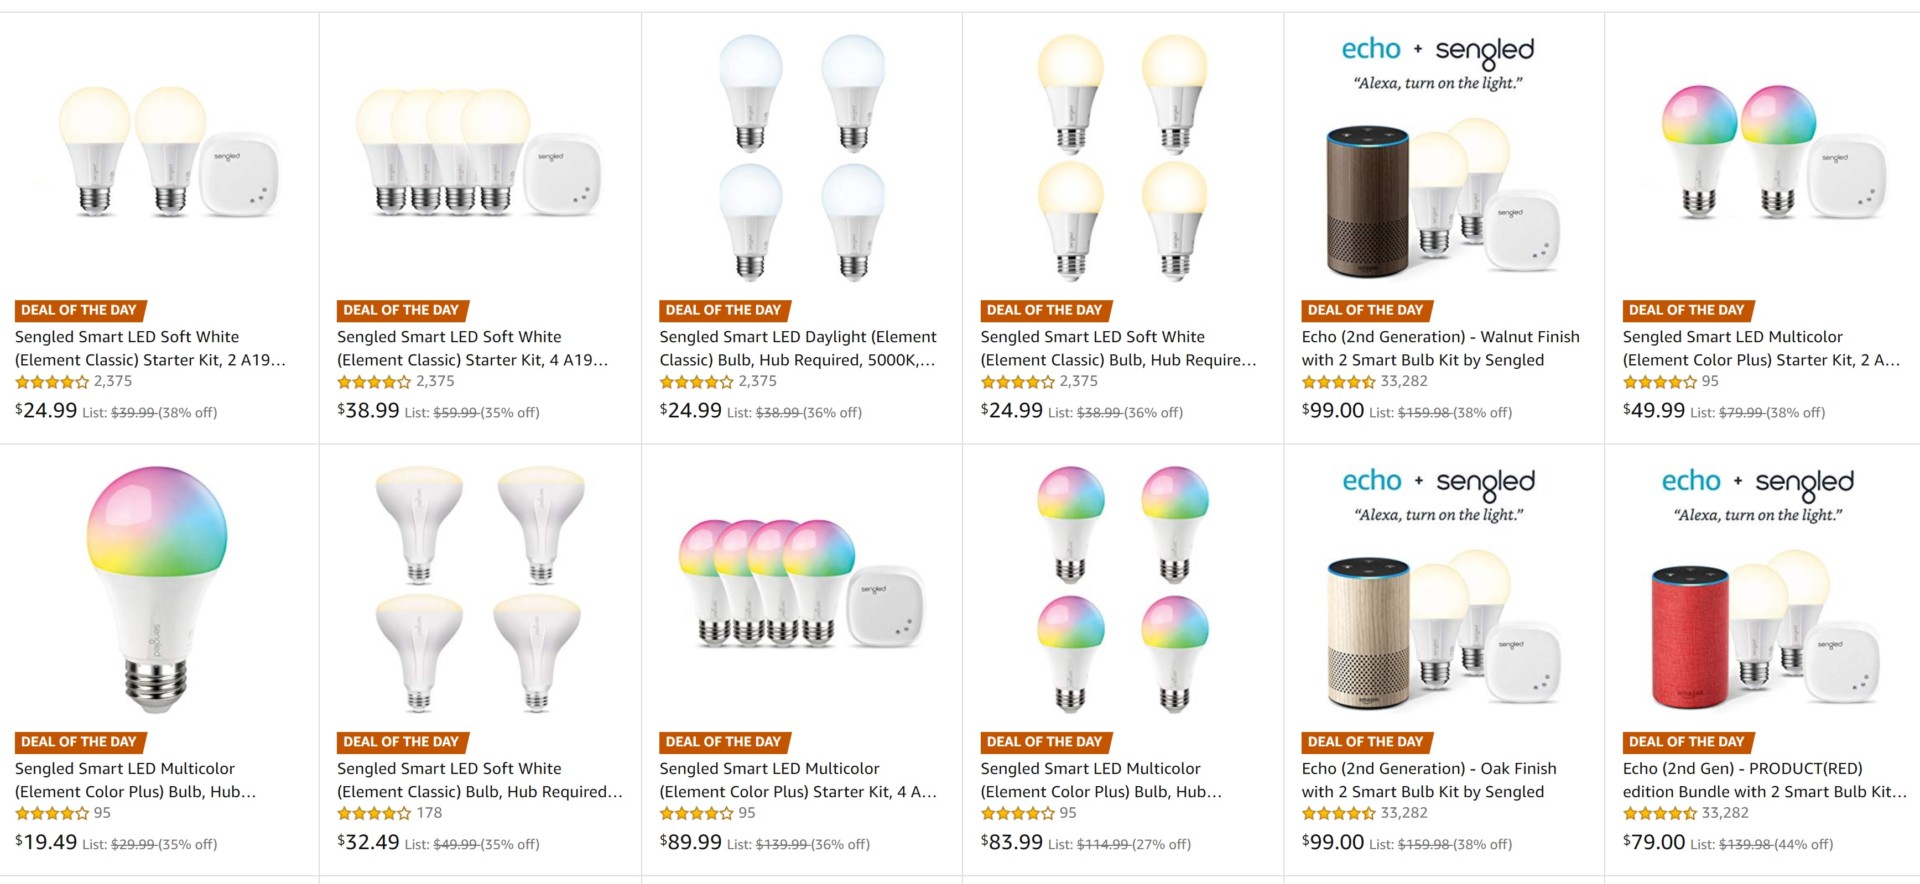 Amazon smart lighting offer